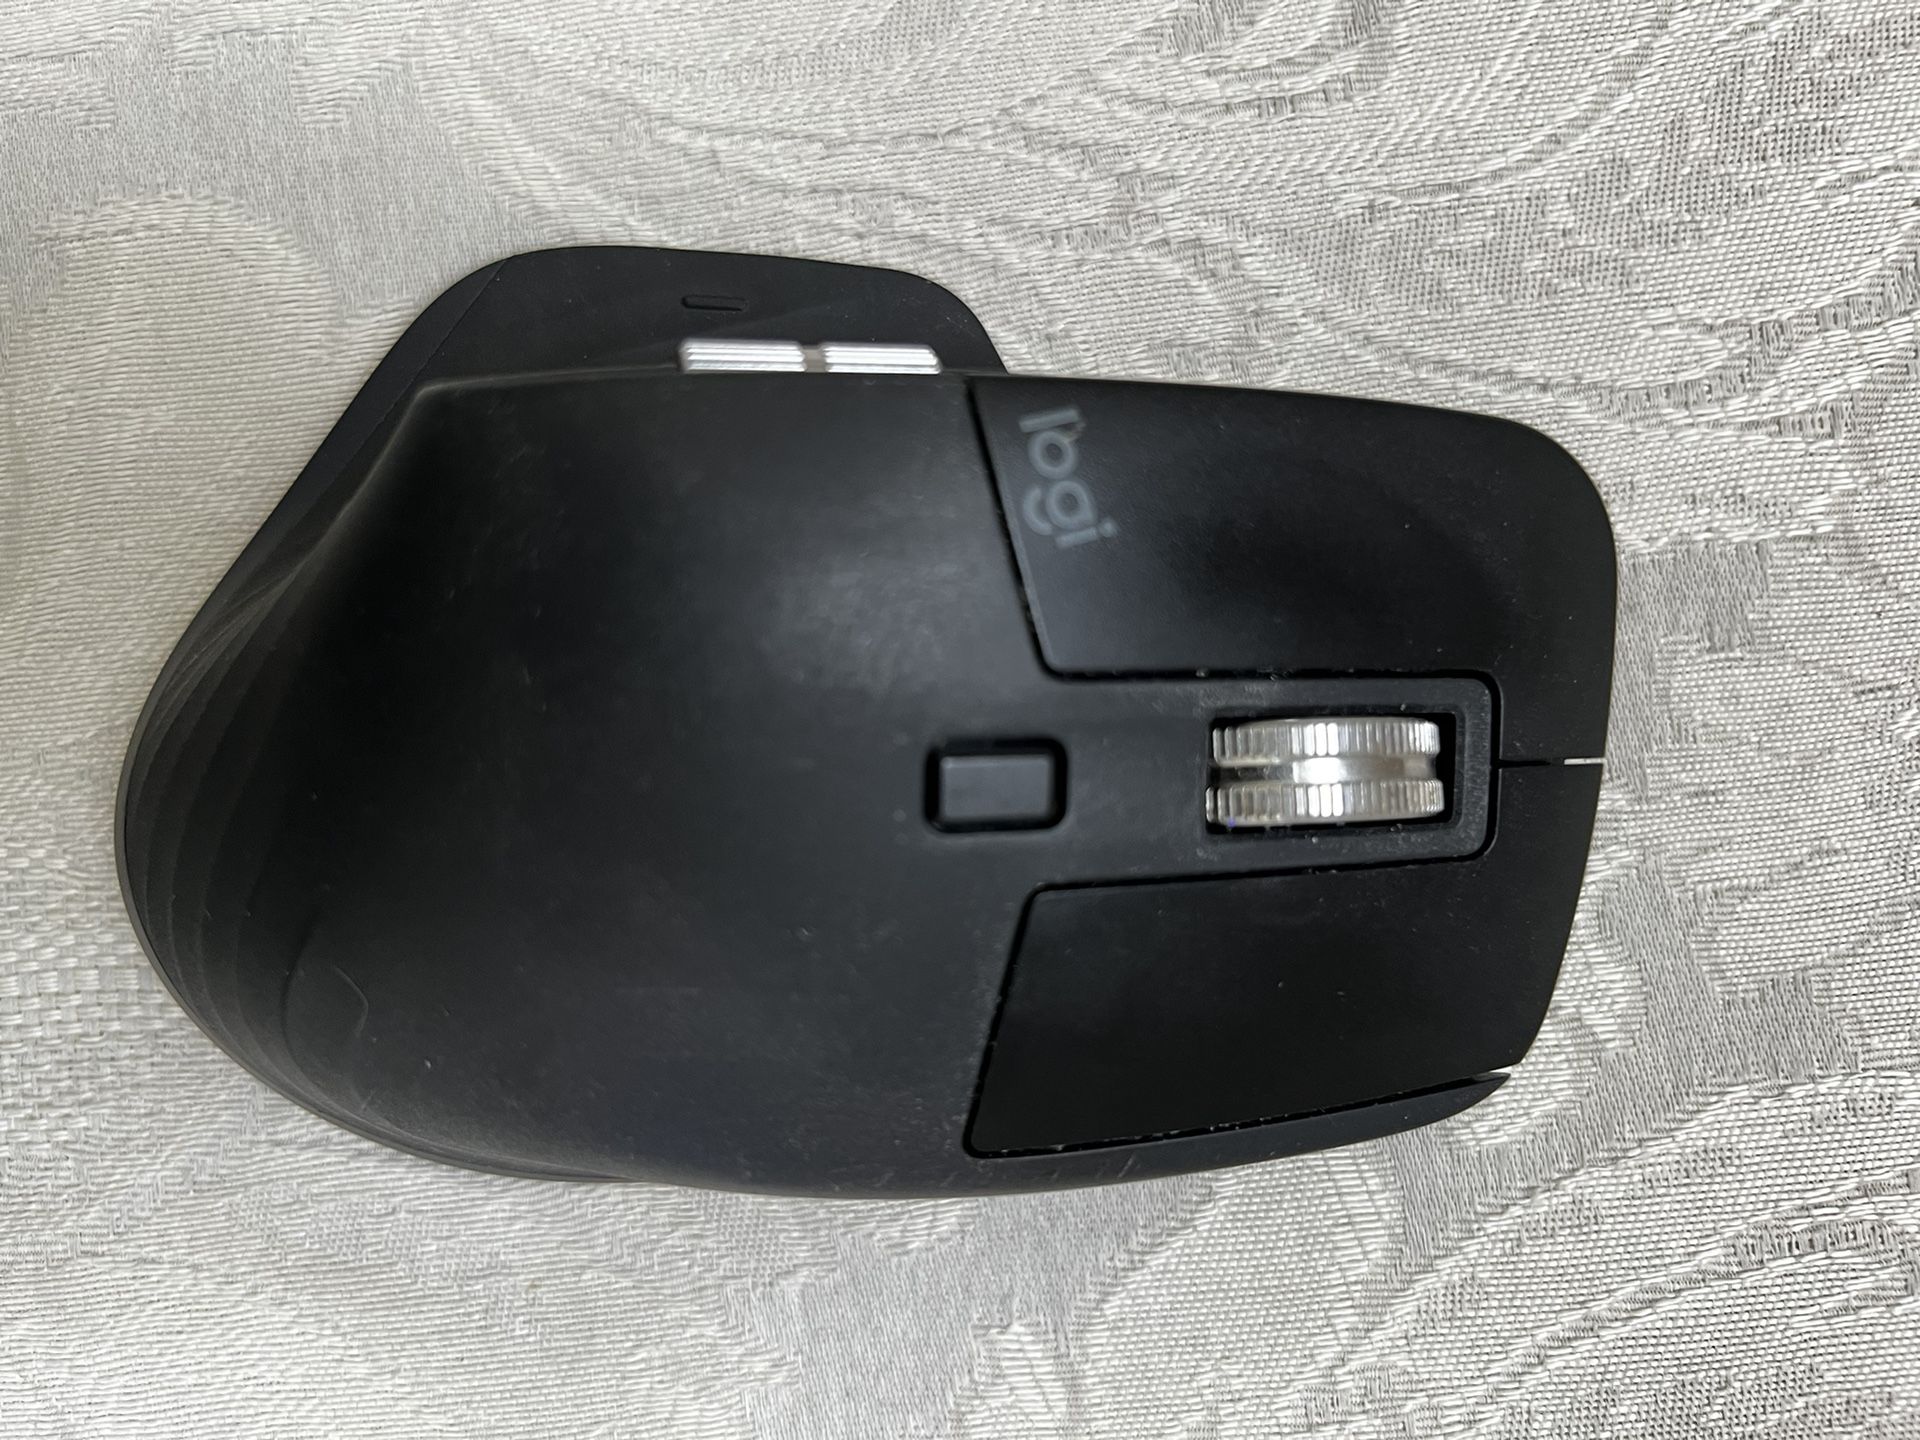 Logitech MX Master 3 Wireless Laser Mouse in Black